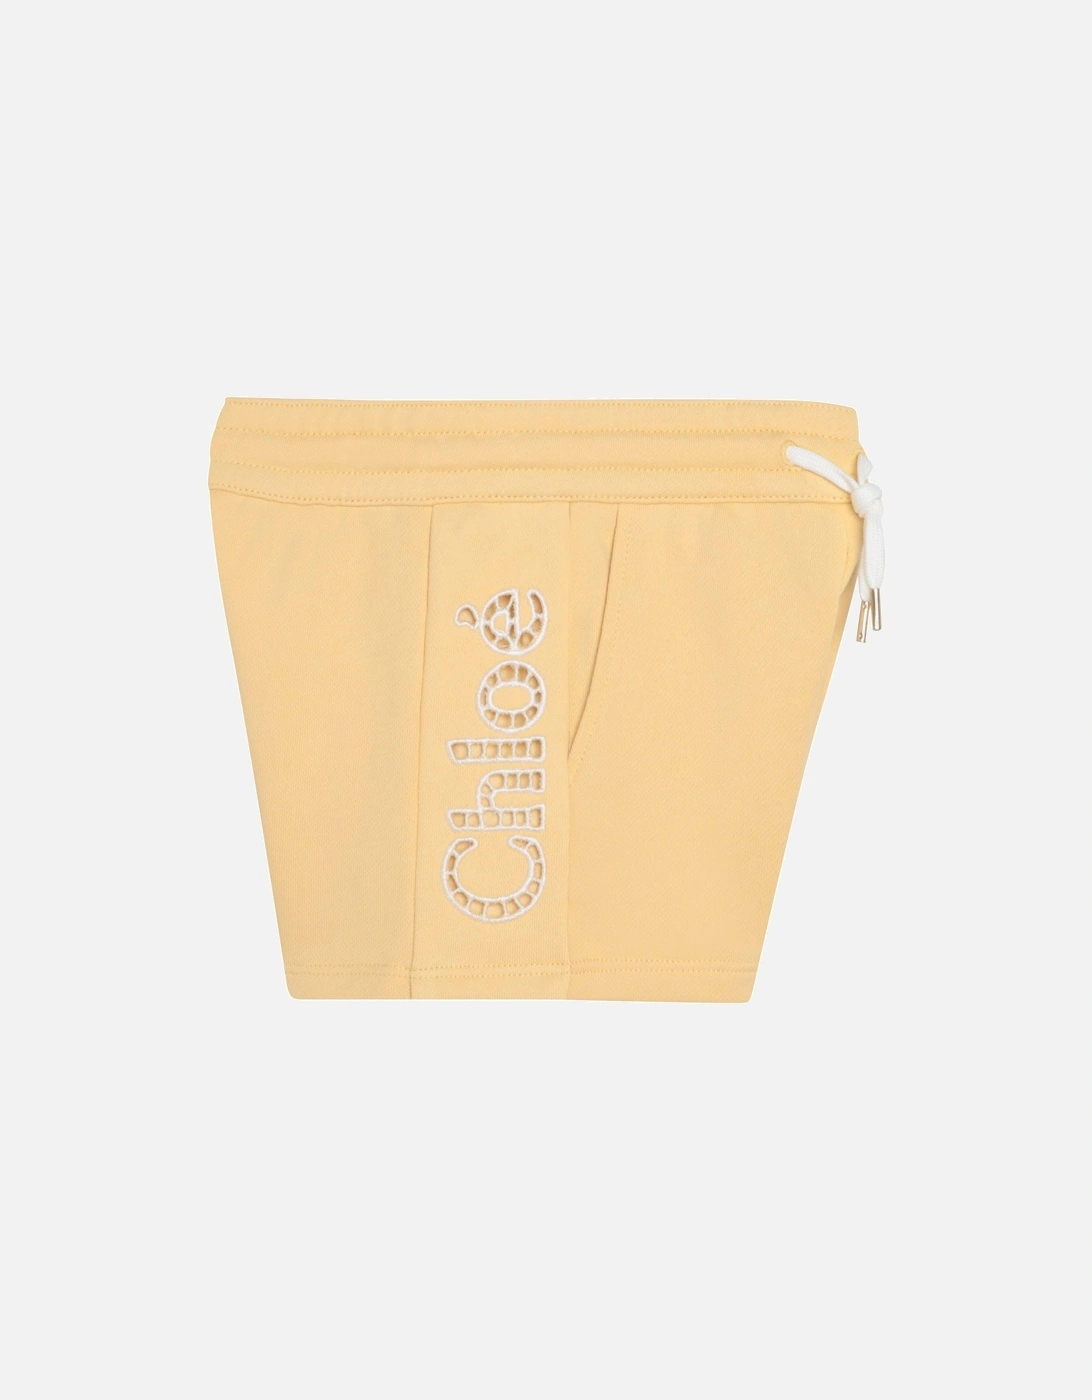 Girls Yellow Logo Shorts